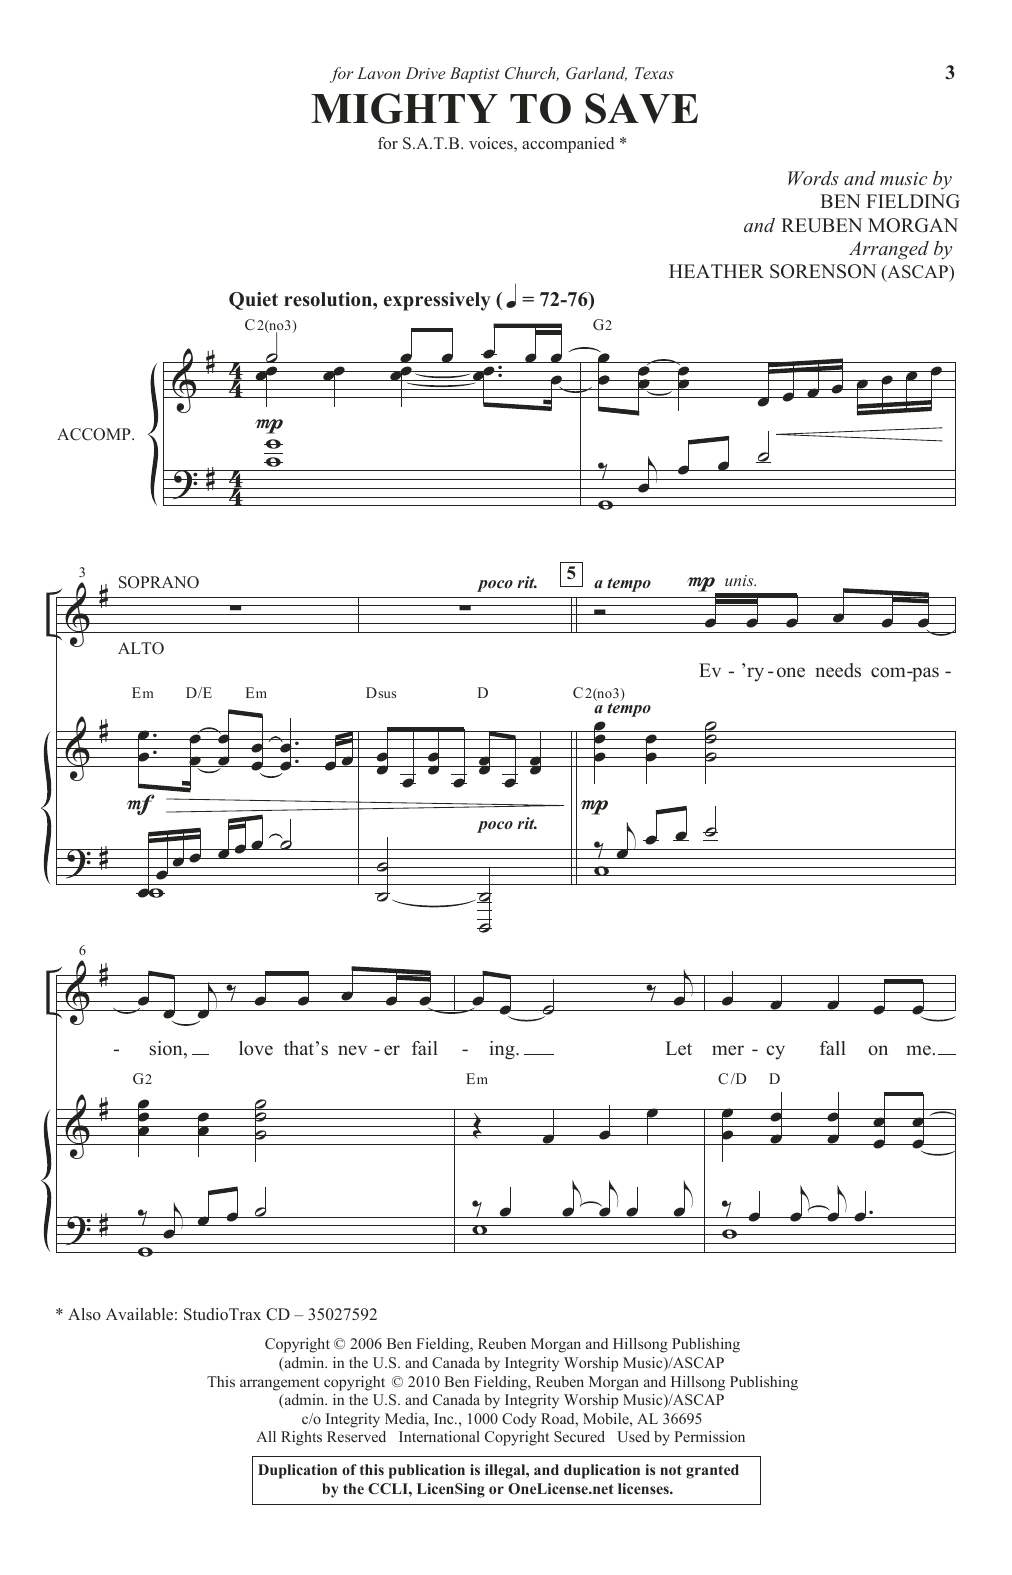 Ben Fielding & Reuben Morgan Mighty To Save (arr. Heather Sorenson) Sheet Music Notes & Chords for SATB Choir - Download or Print PDF